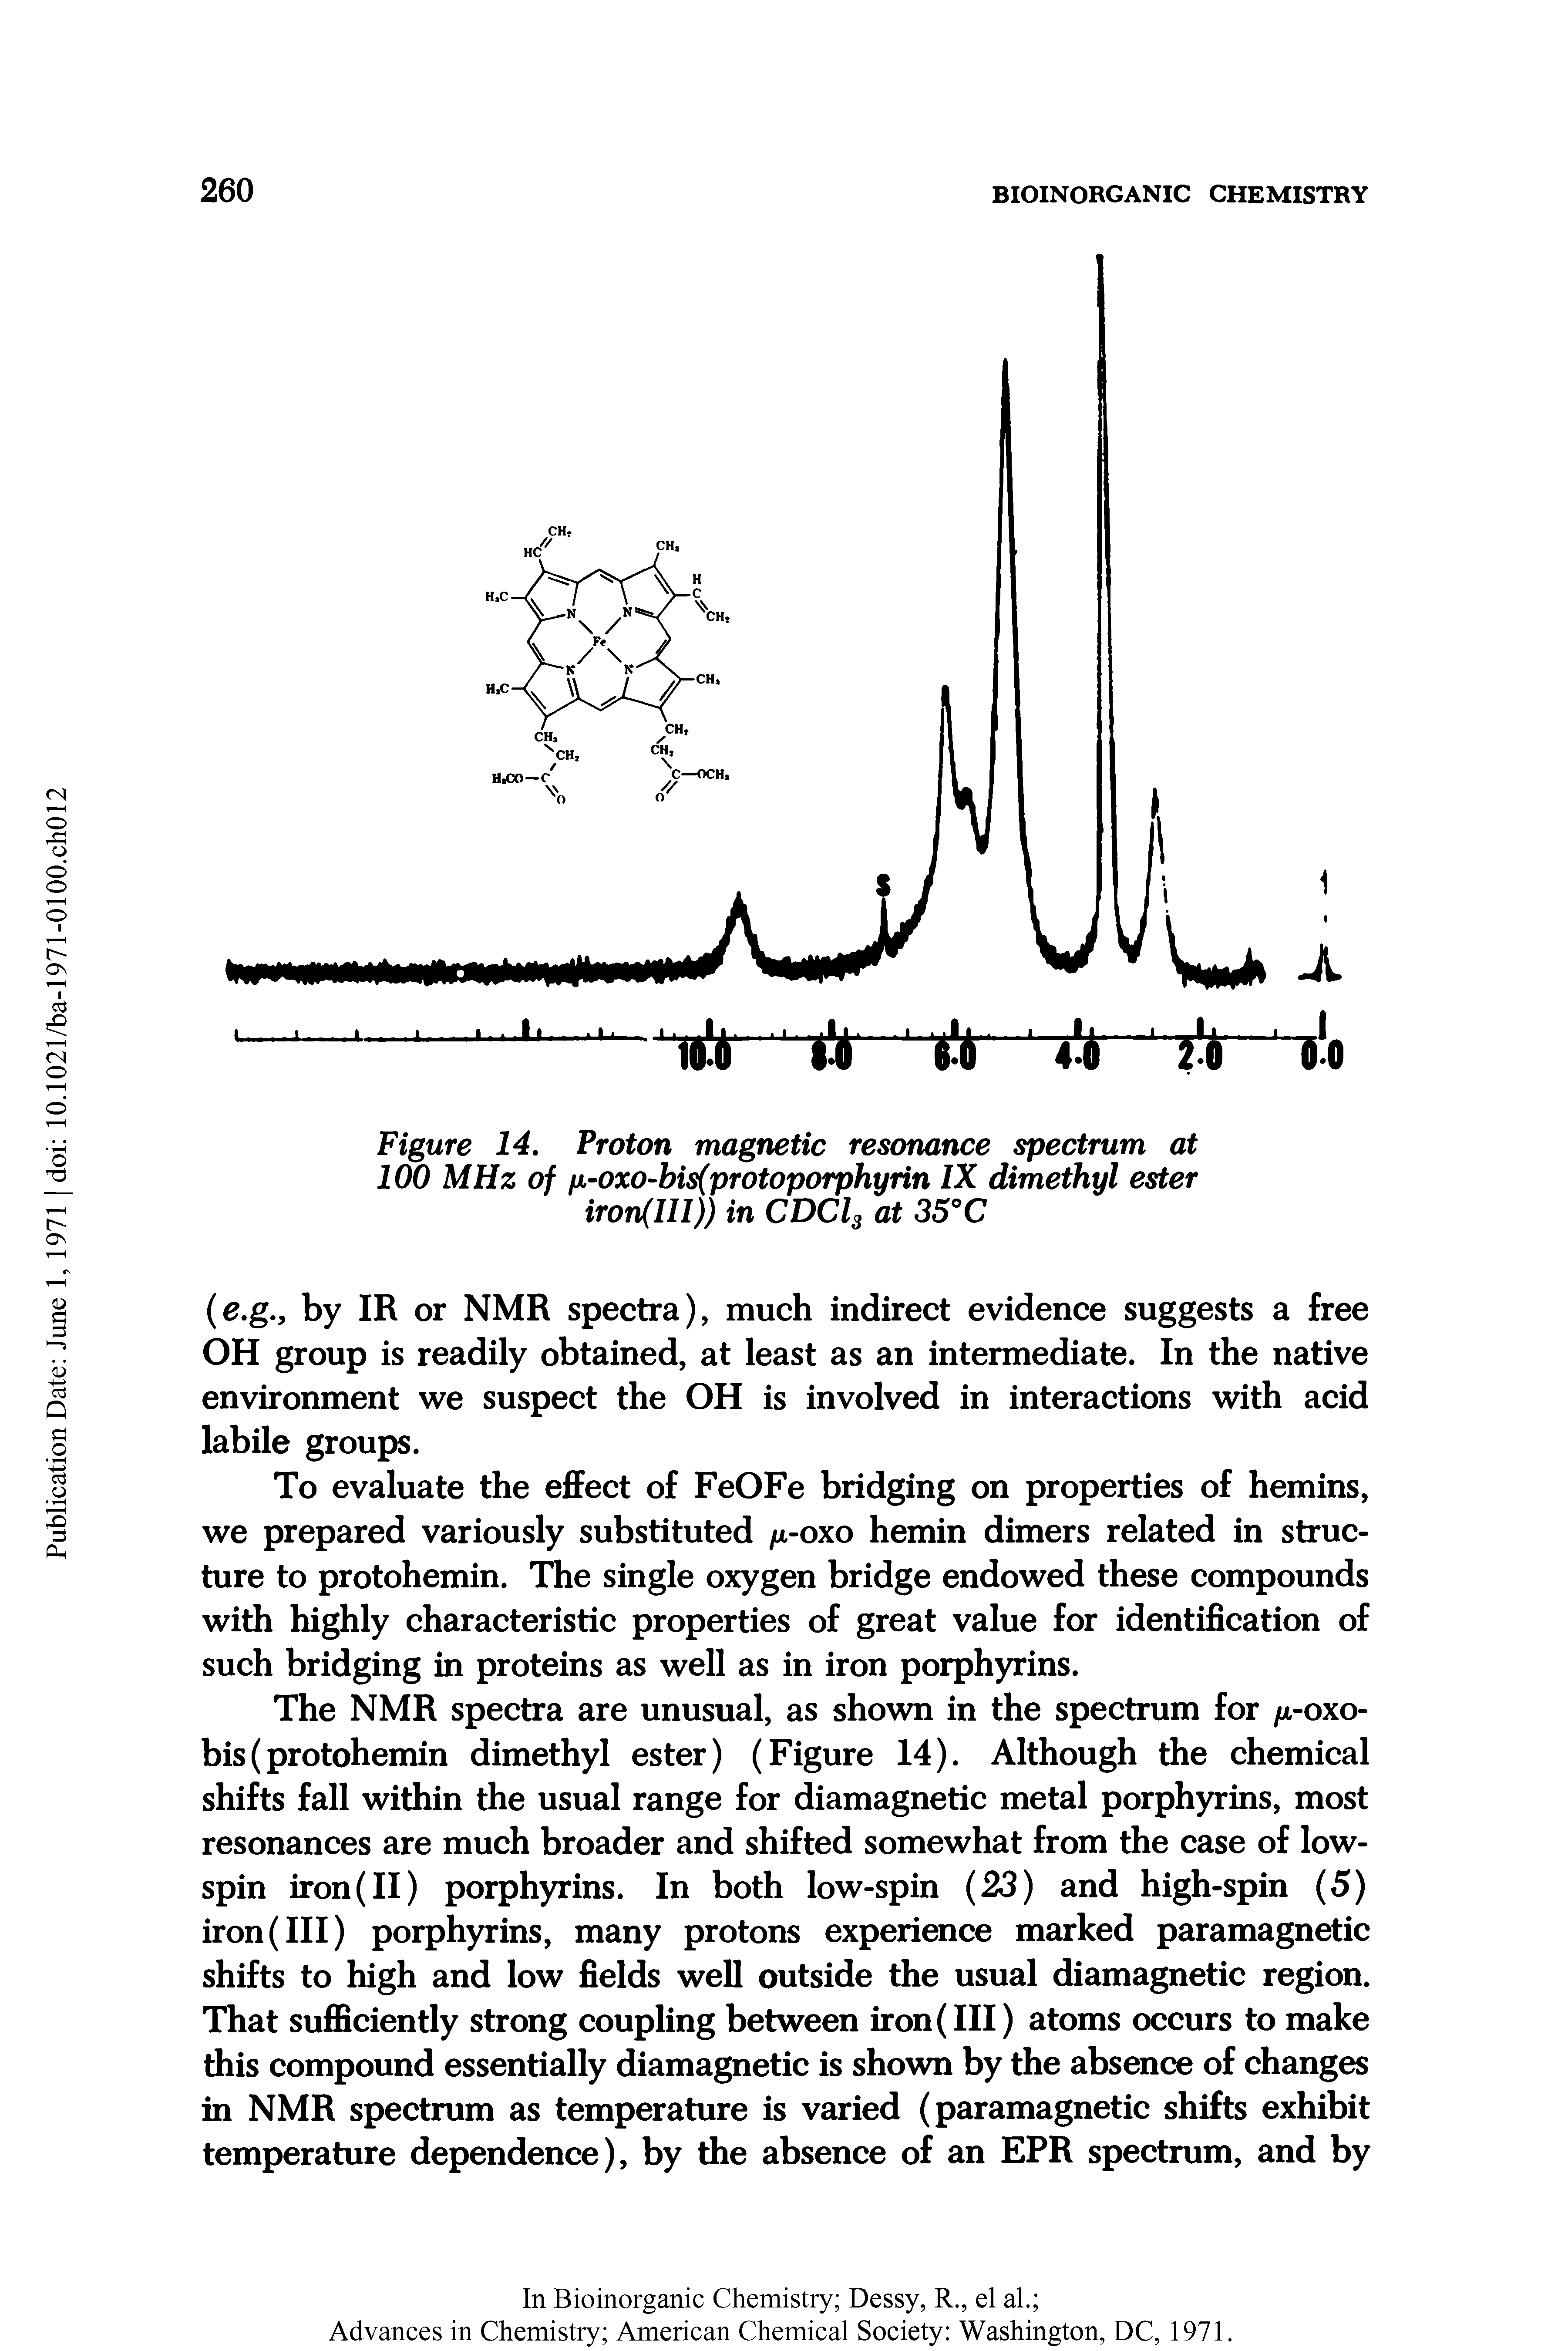 Figure 14, Proton magnetic resonance spectrum at 100 MHz of fx oxo bis(protoporphyrin IX dimethyl ester iron(lIl)) in CDCI3 at 35°C...